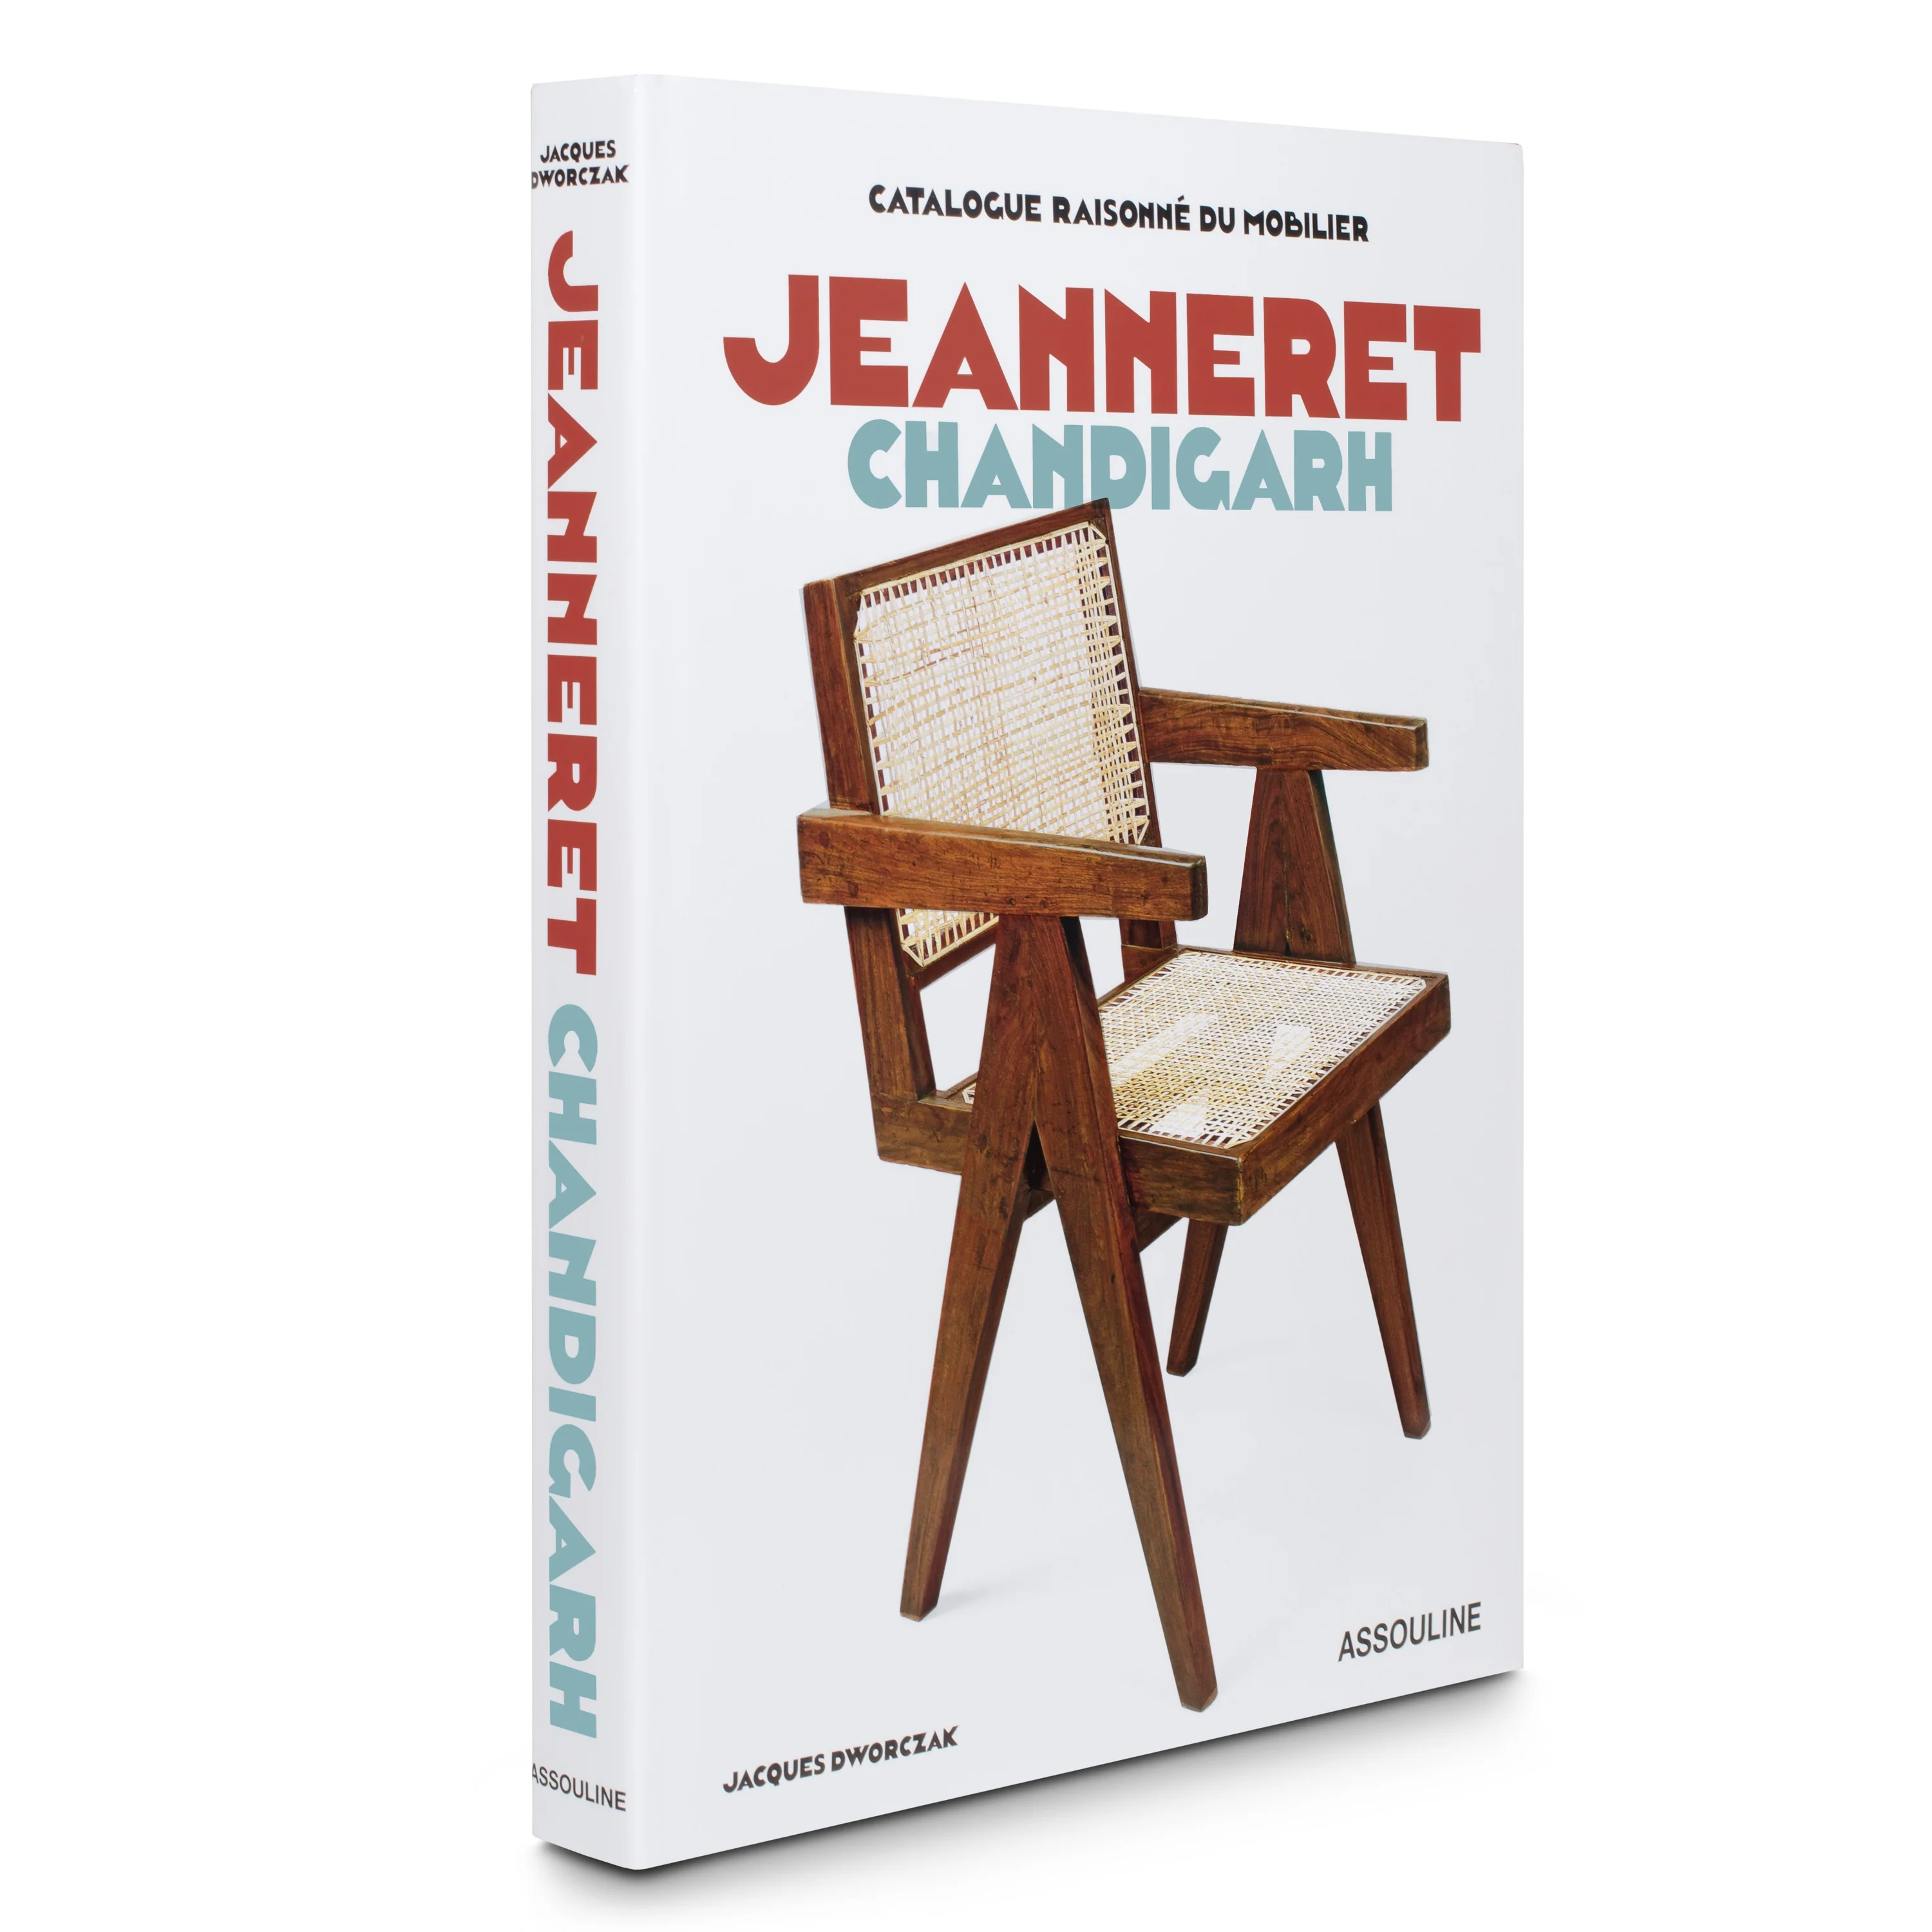 Catalogue Raisonne du Mobilier: Jeanneret Chandigarh | Assouline | Iris Gifts & Décor